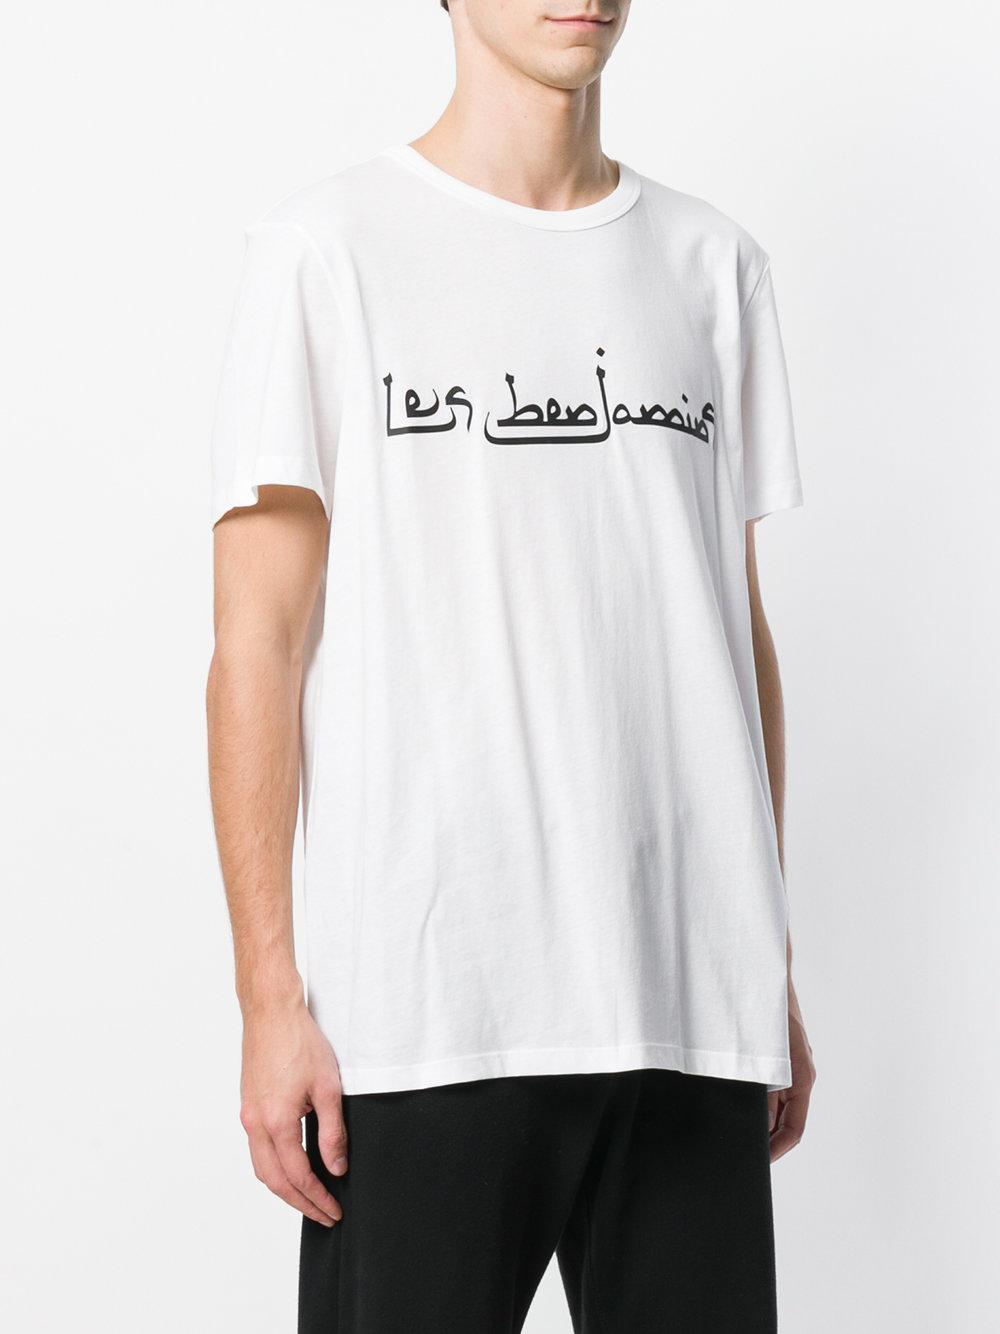 Les Benjamins Cotton Arabic Print T-shirt in White for Men - Lyst